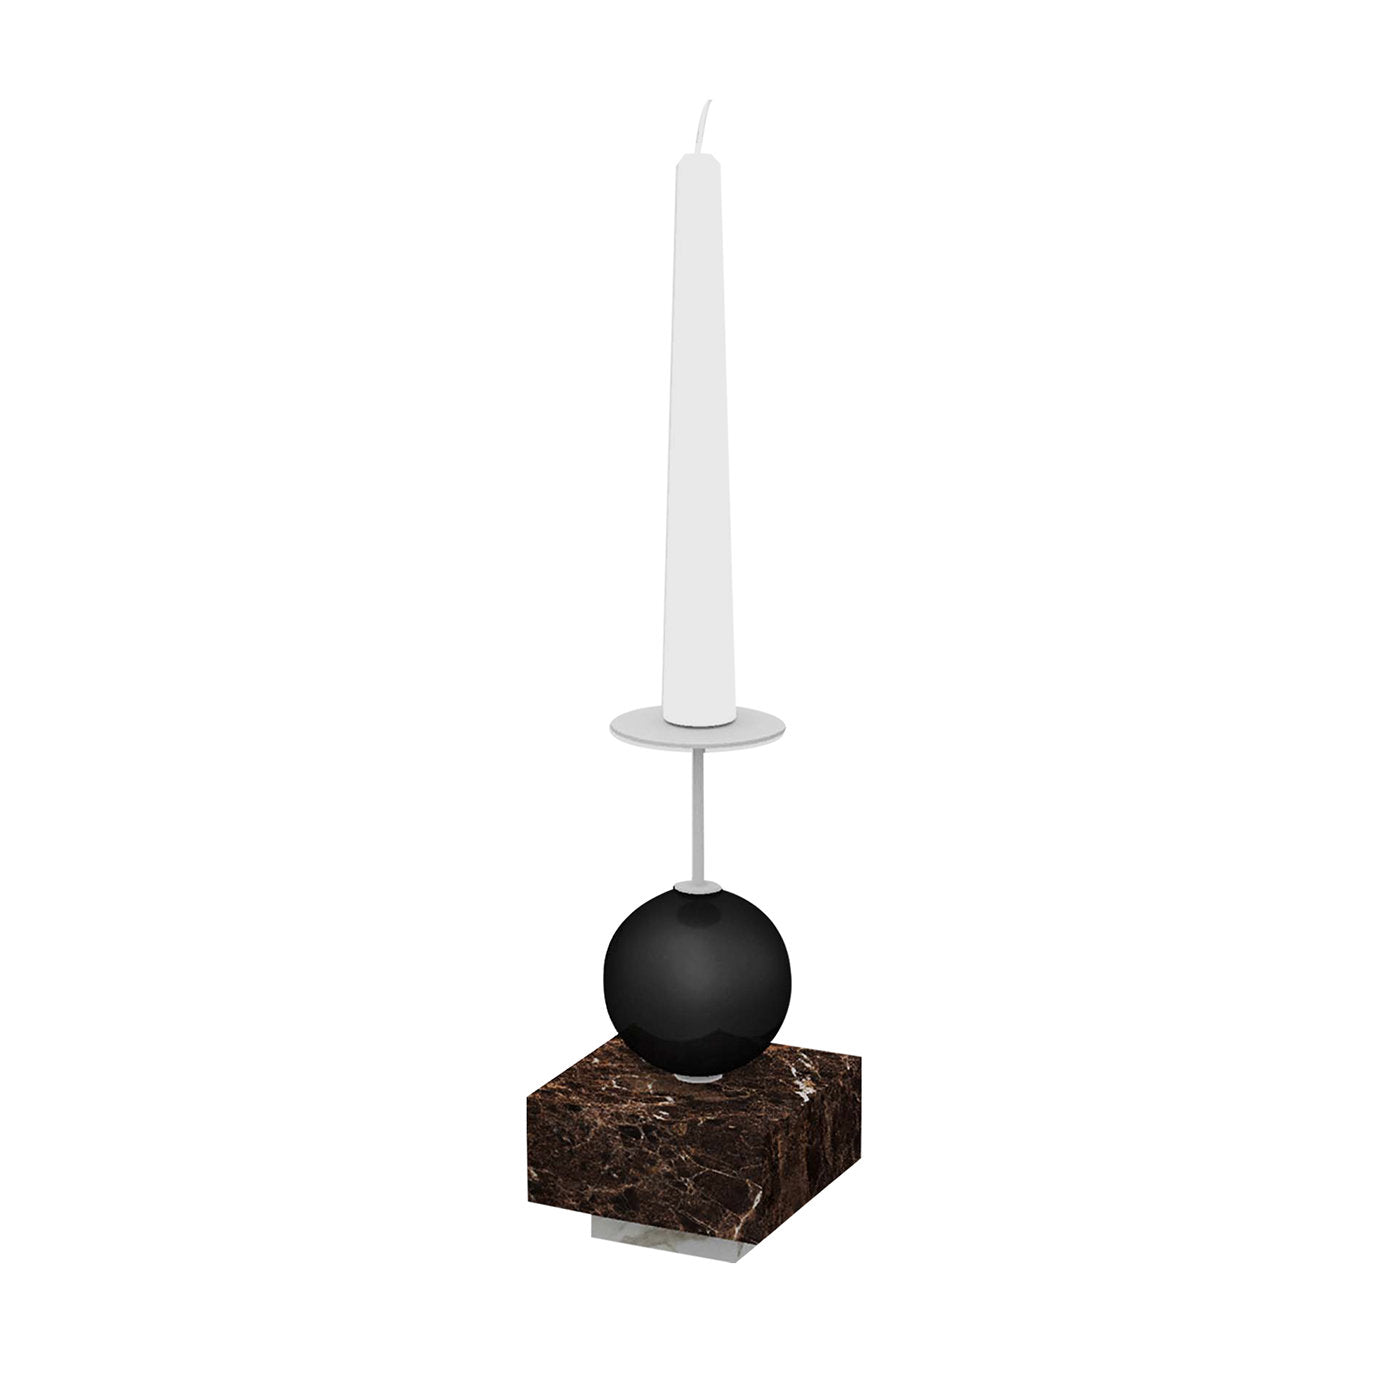 Raccontami Emperador Dark, Black and White Candle Holder - Main view